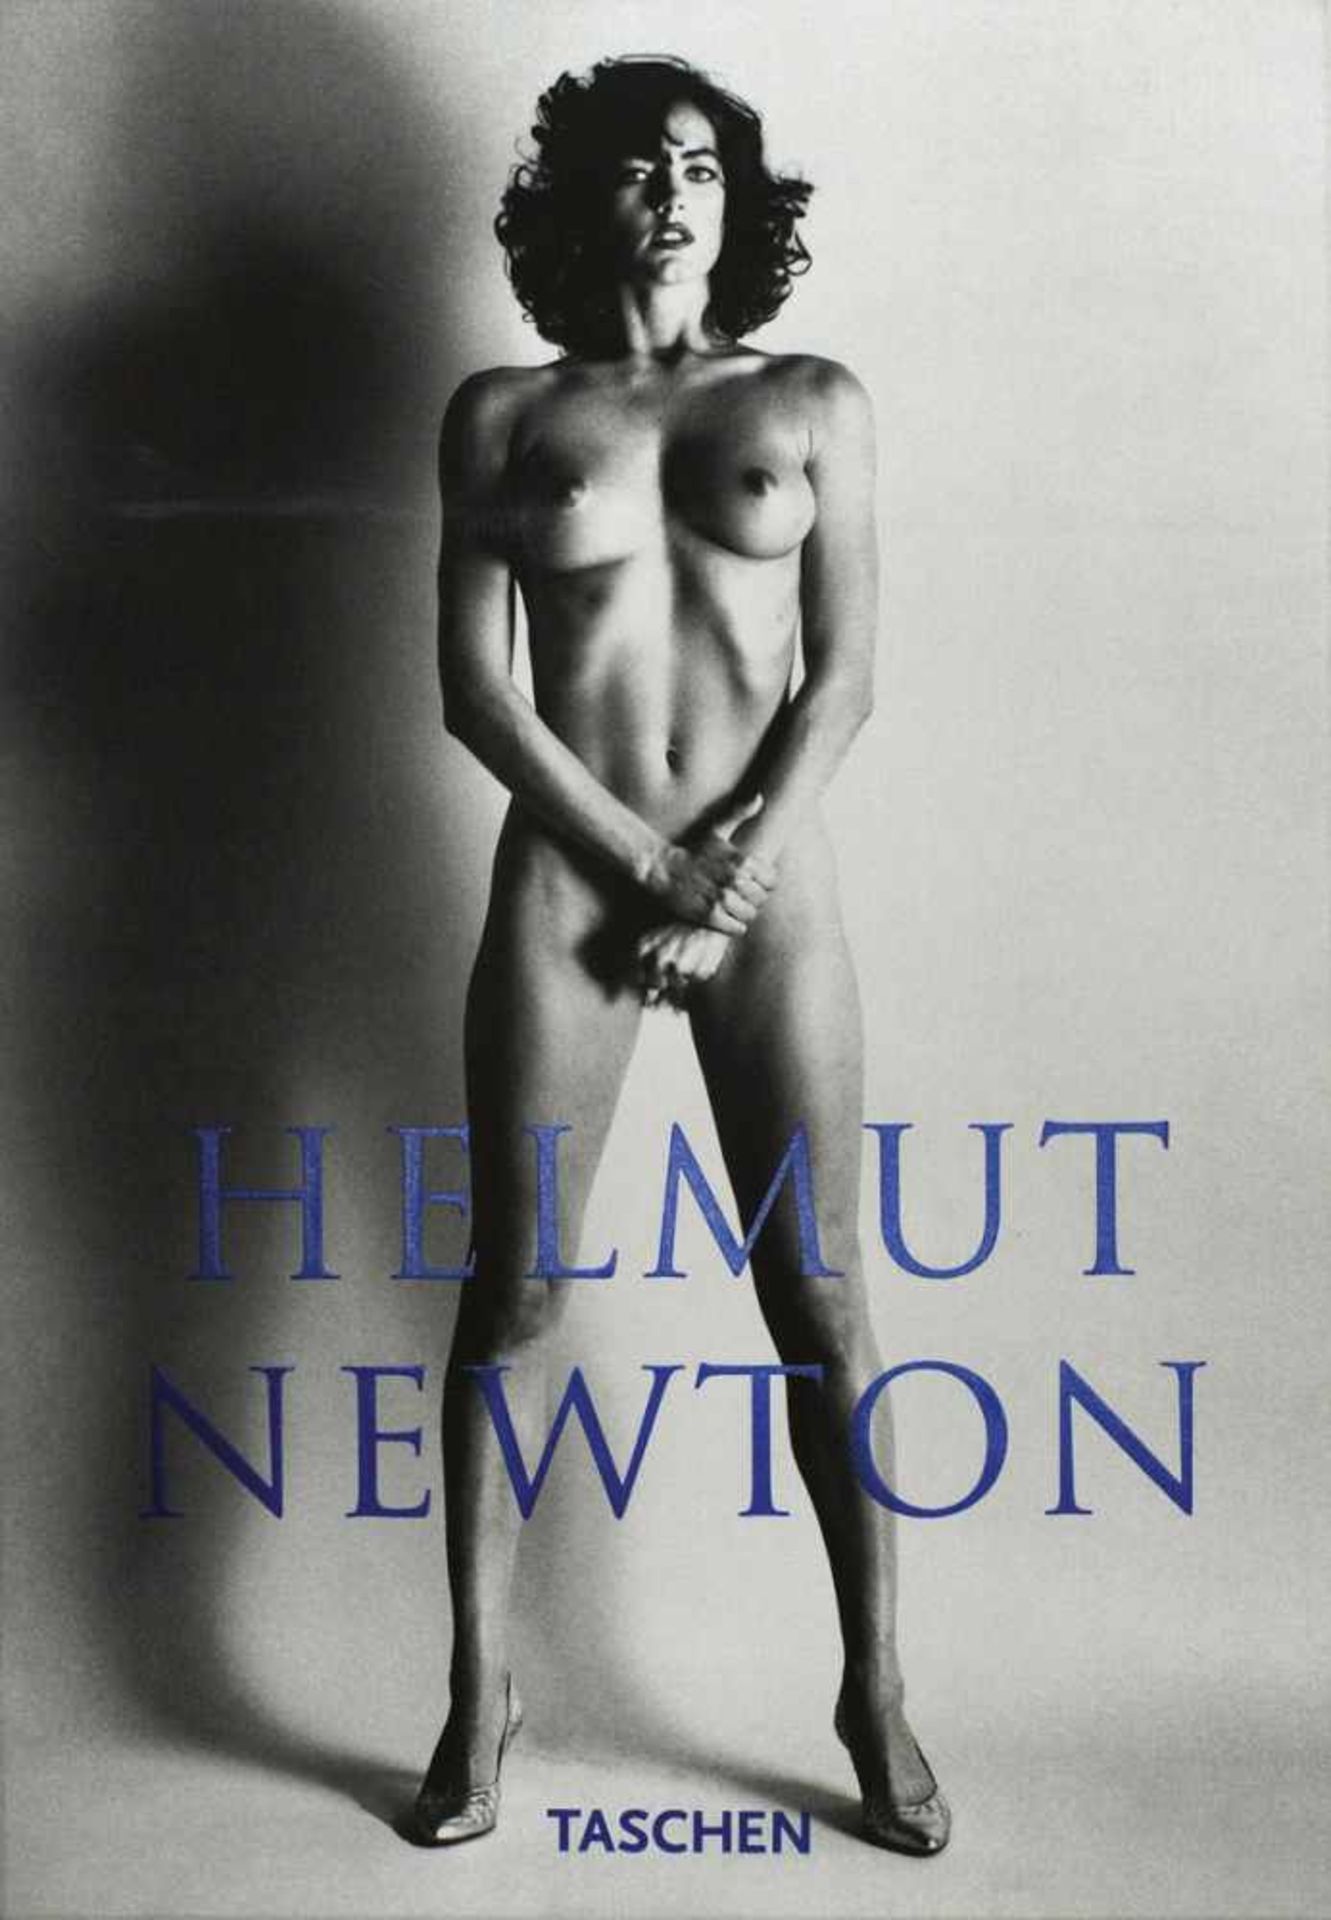 Newton, Helmut: Sumo. Köln 1999. Elephant-Folio